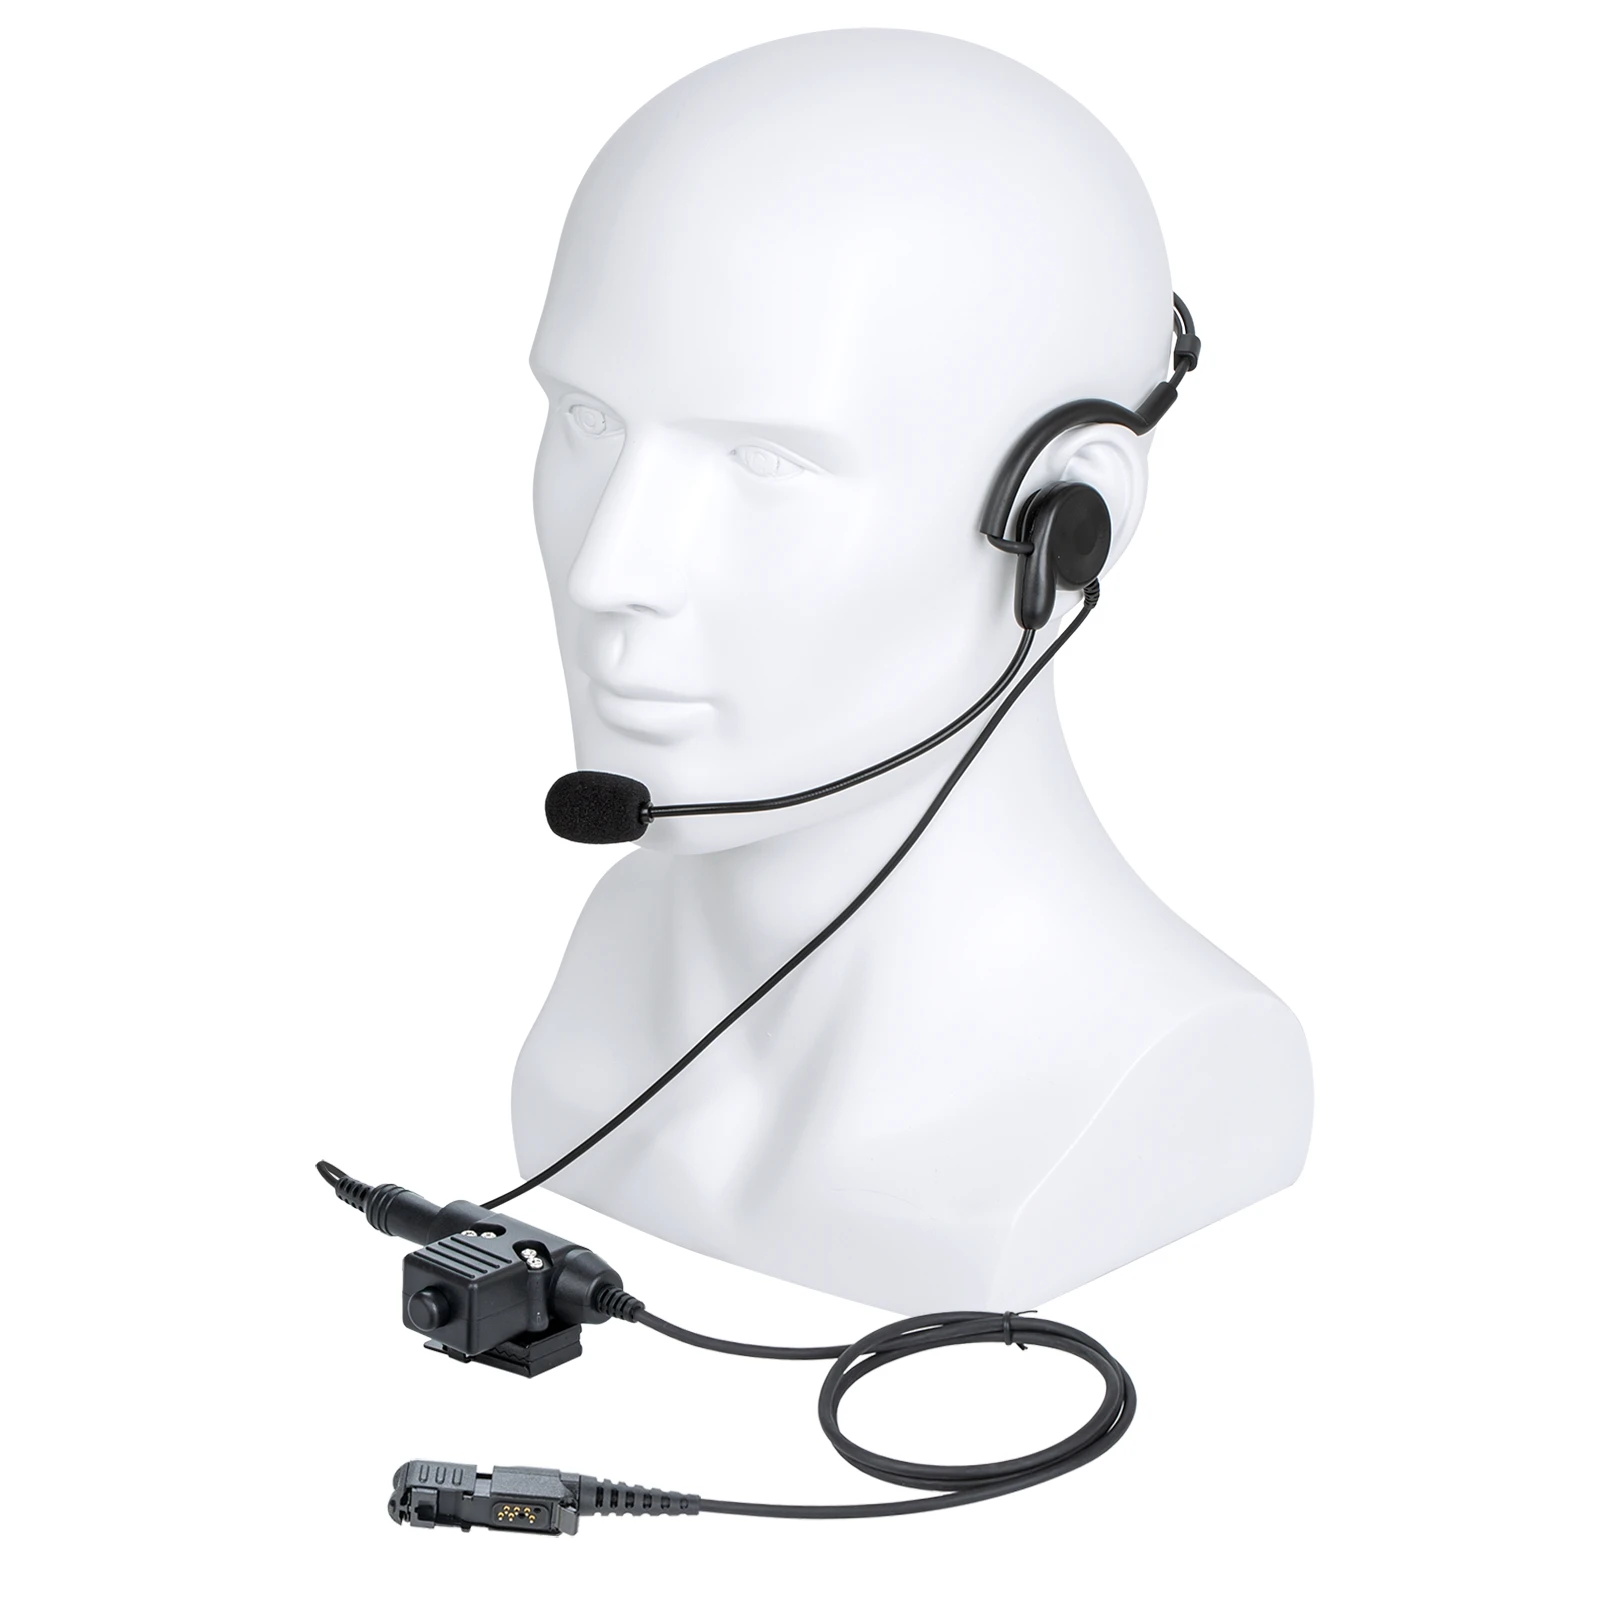 

7.1mm bone conduction walkie talkie Radio Headset Earpiece Microphone with U94 PTT Adapter For Motorola Xir P6600 P6620 XPR3300